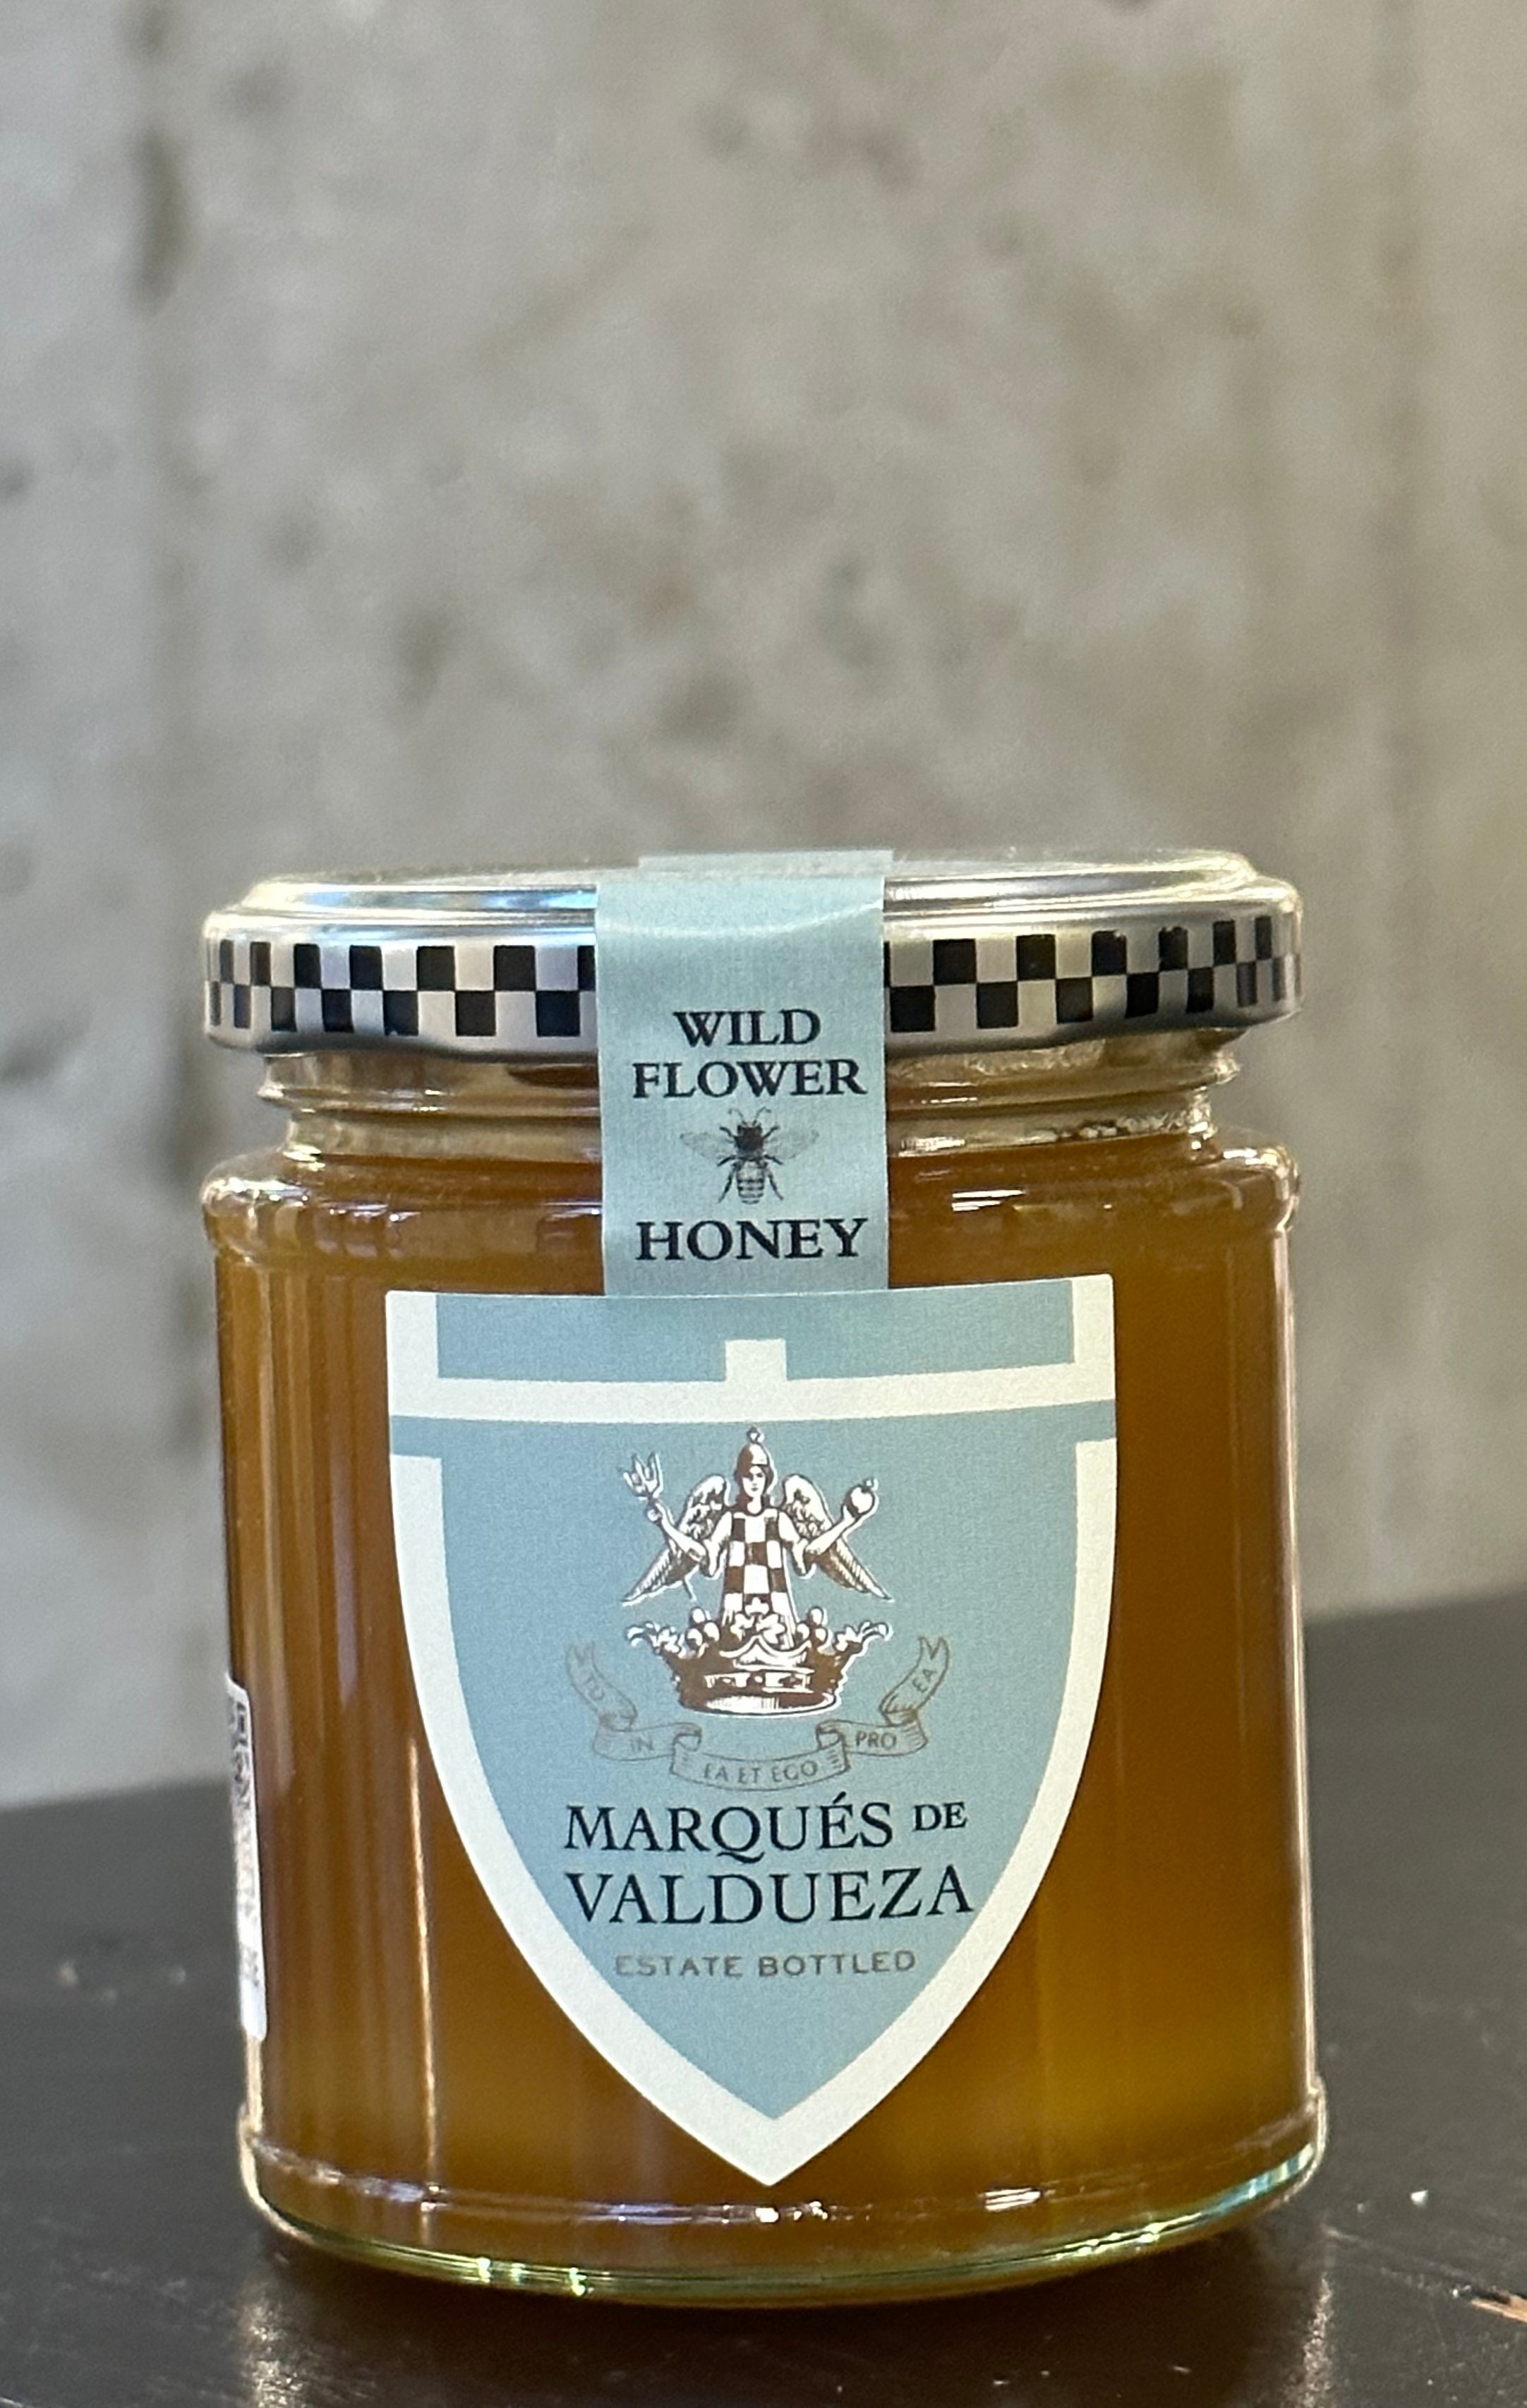 Marqués de Valdueza Wild Flower Honey